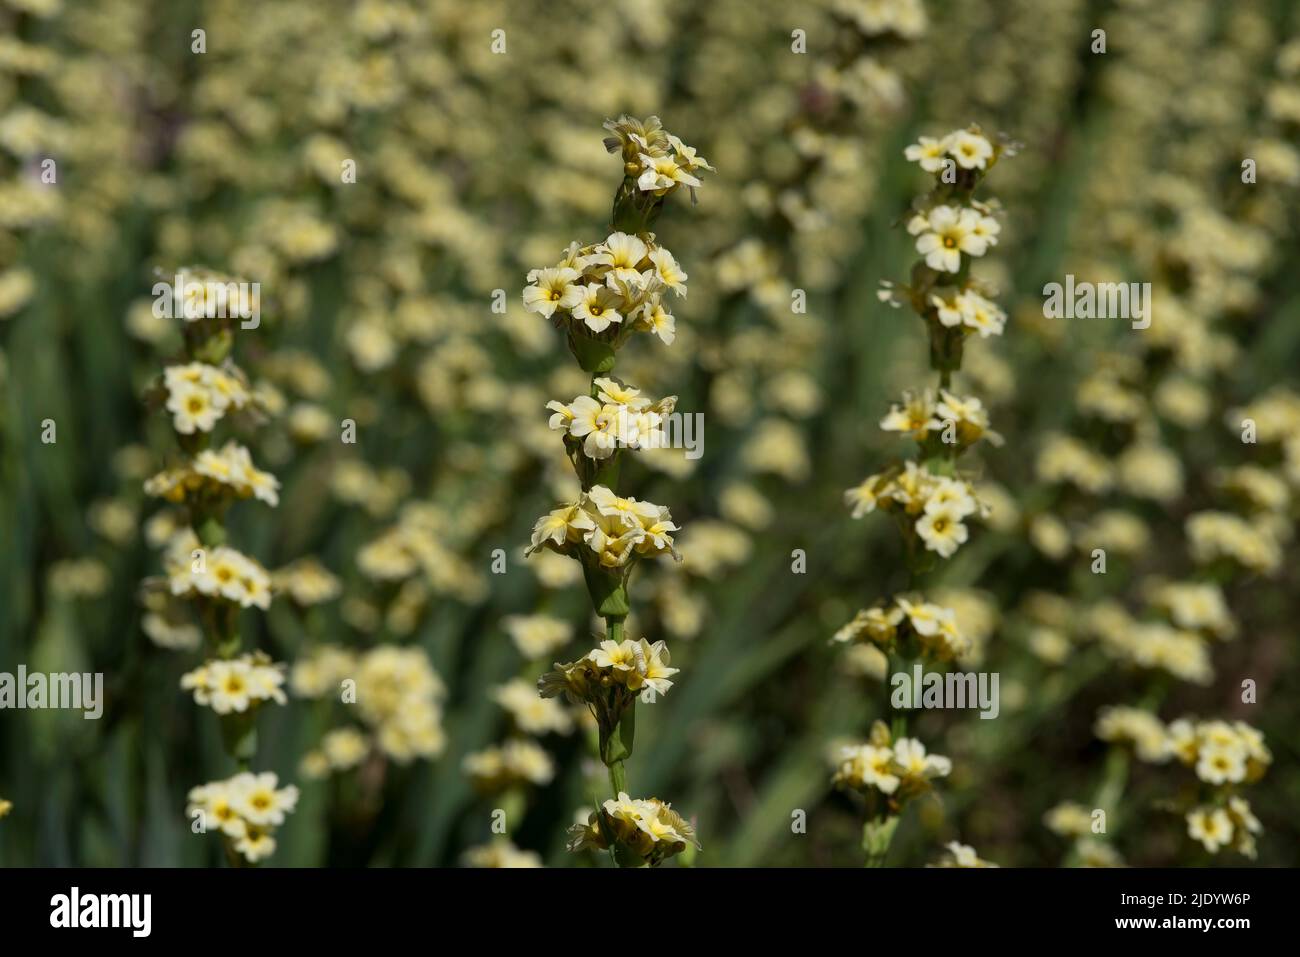 Patch of Pale Yellow-eyed Grass - Sisyrinchium striatum in flower, part of the Iris family, Iridaceae. Stock Photo